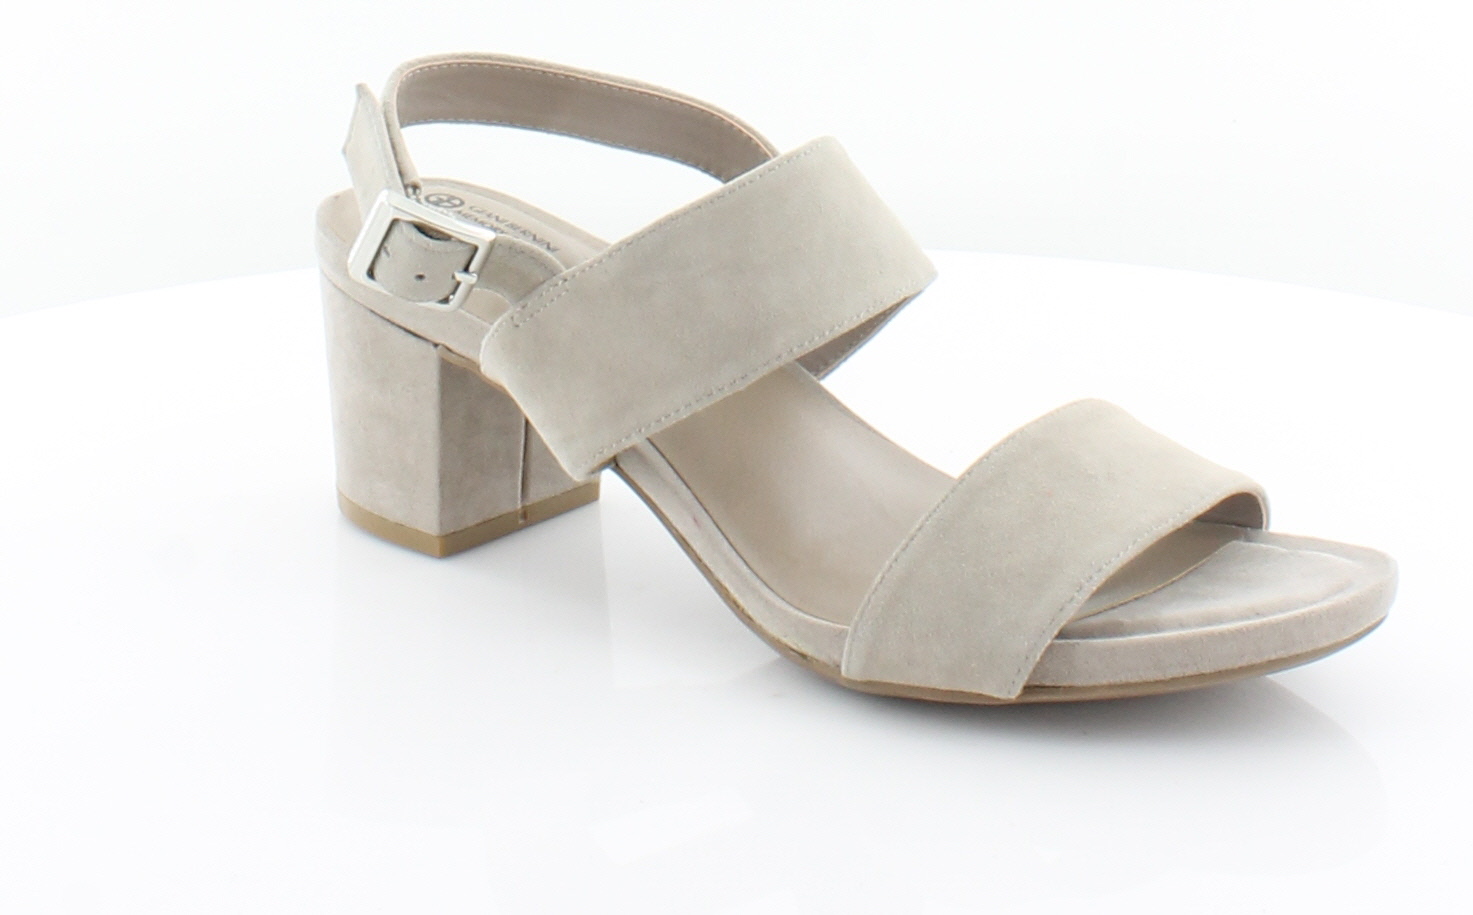 Giani Bernini Maggiee Gray Womens Shoes Size 9.5 M Sandals